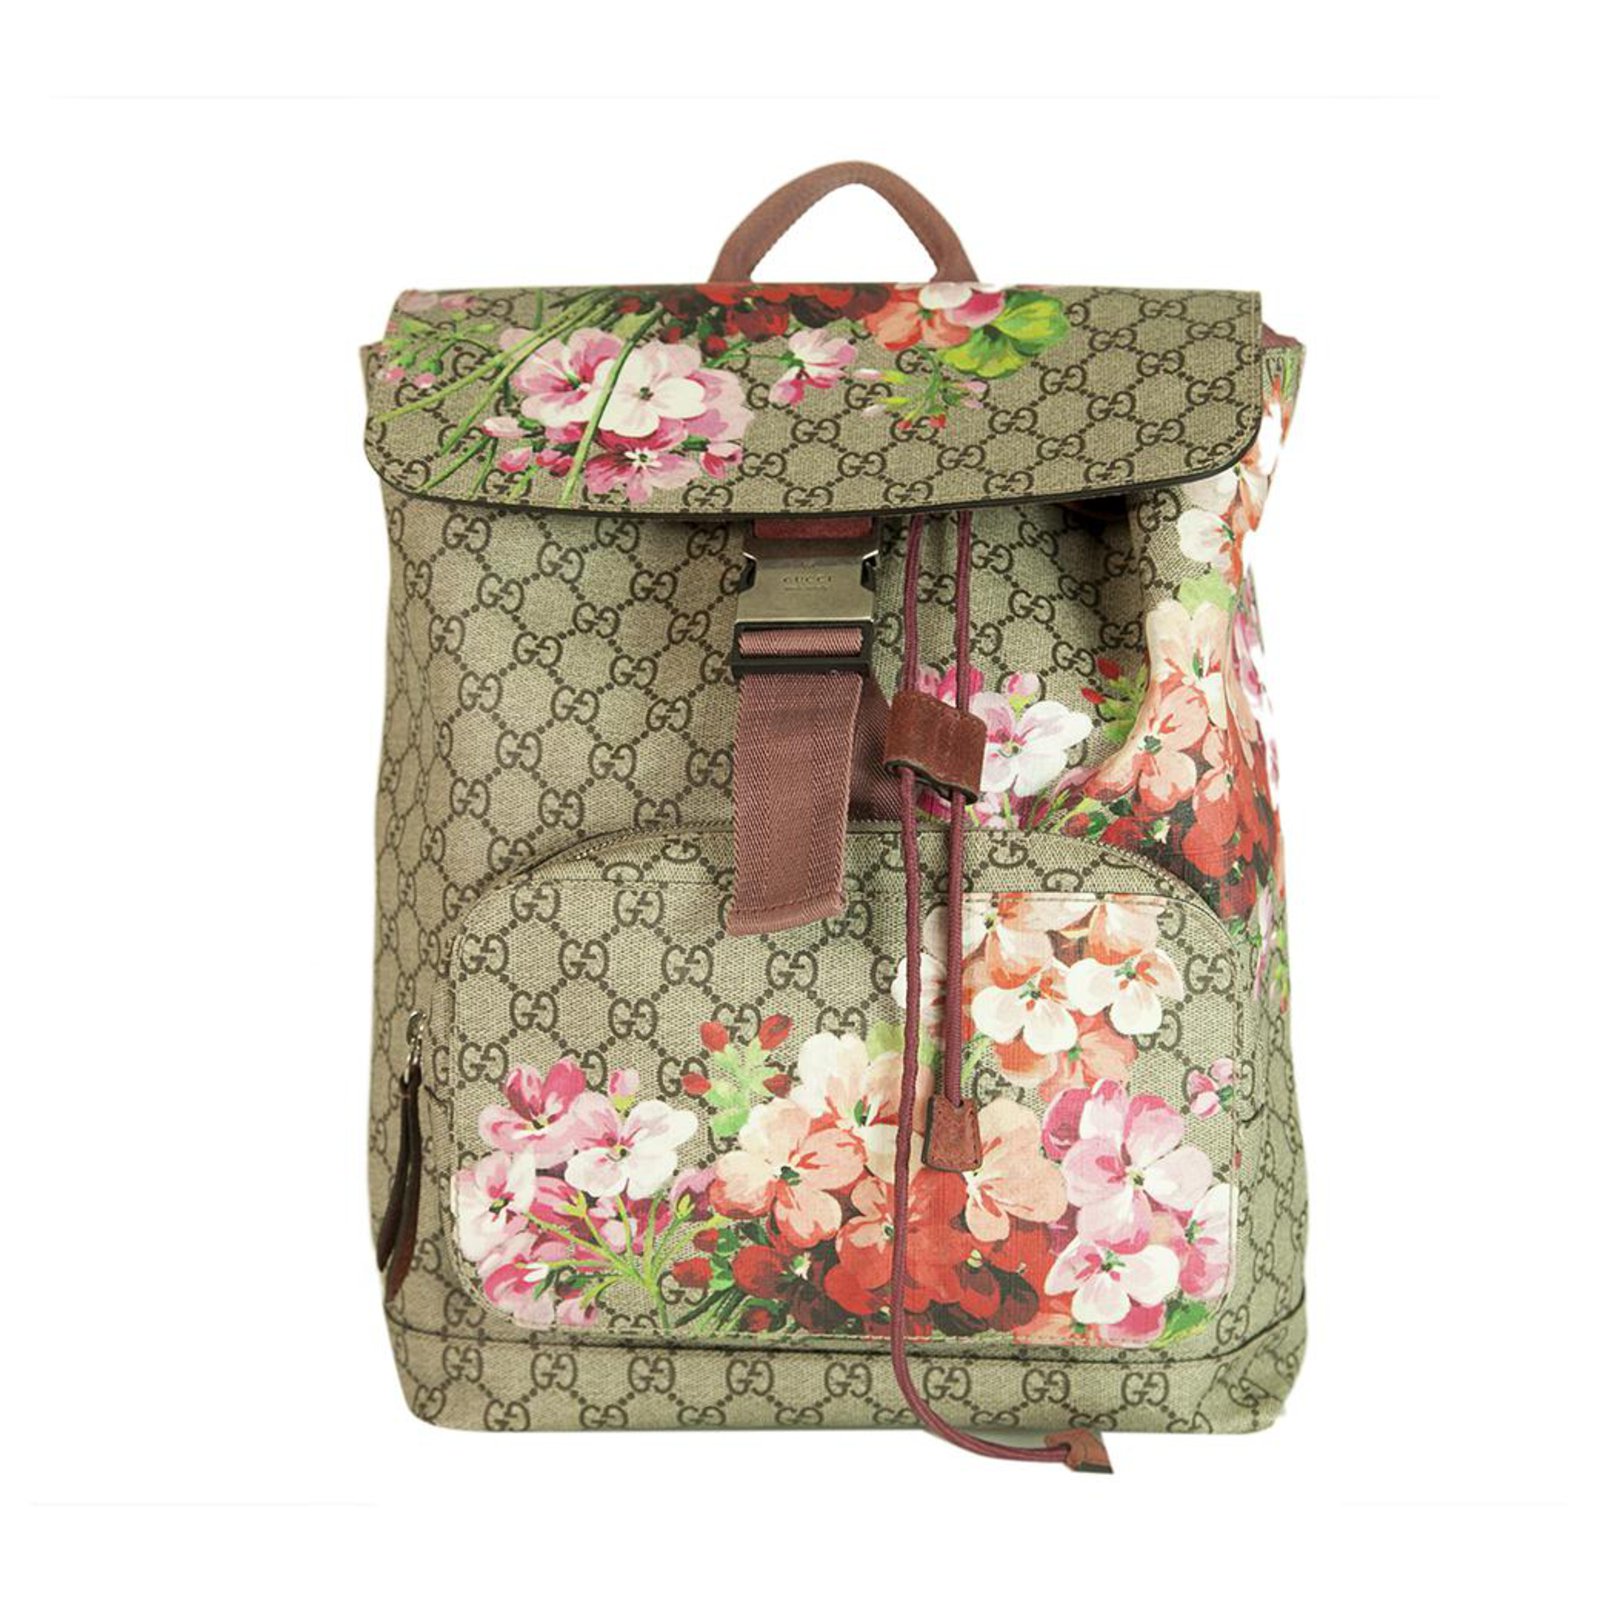 Gucci GG Monogram backpack